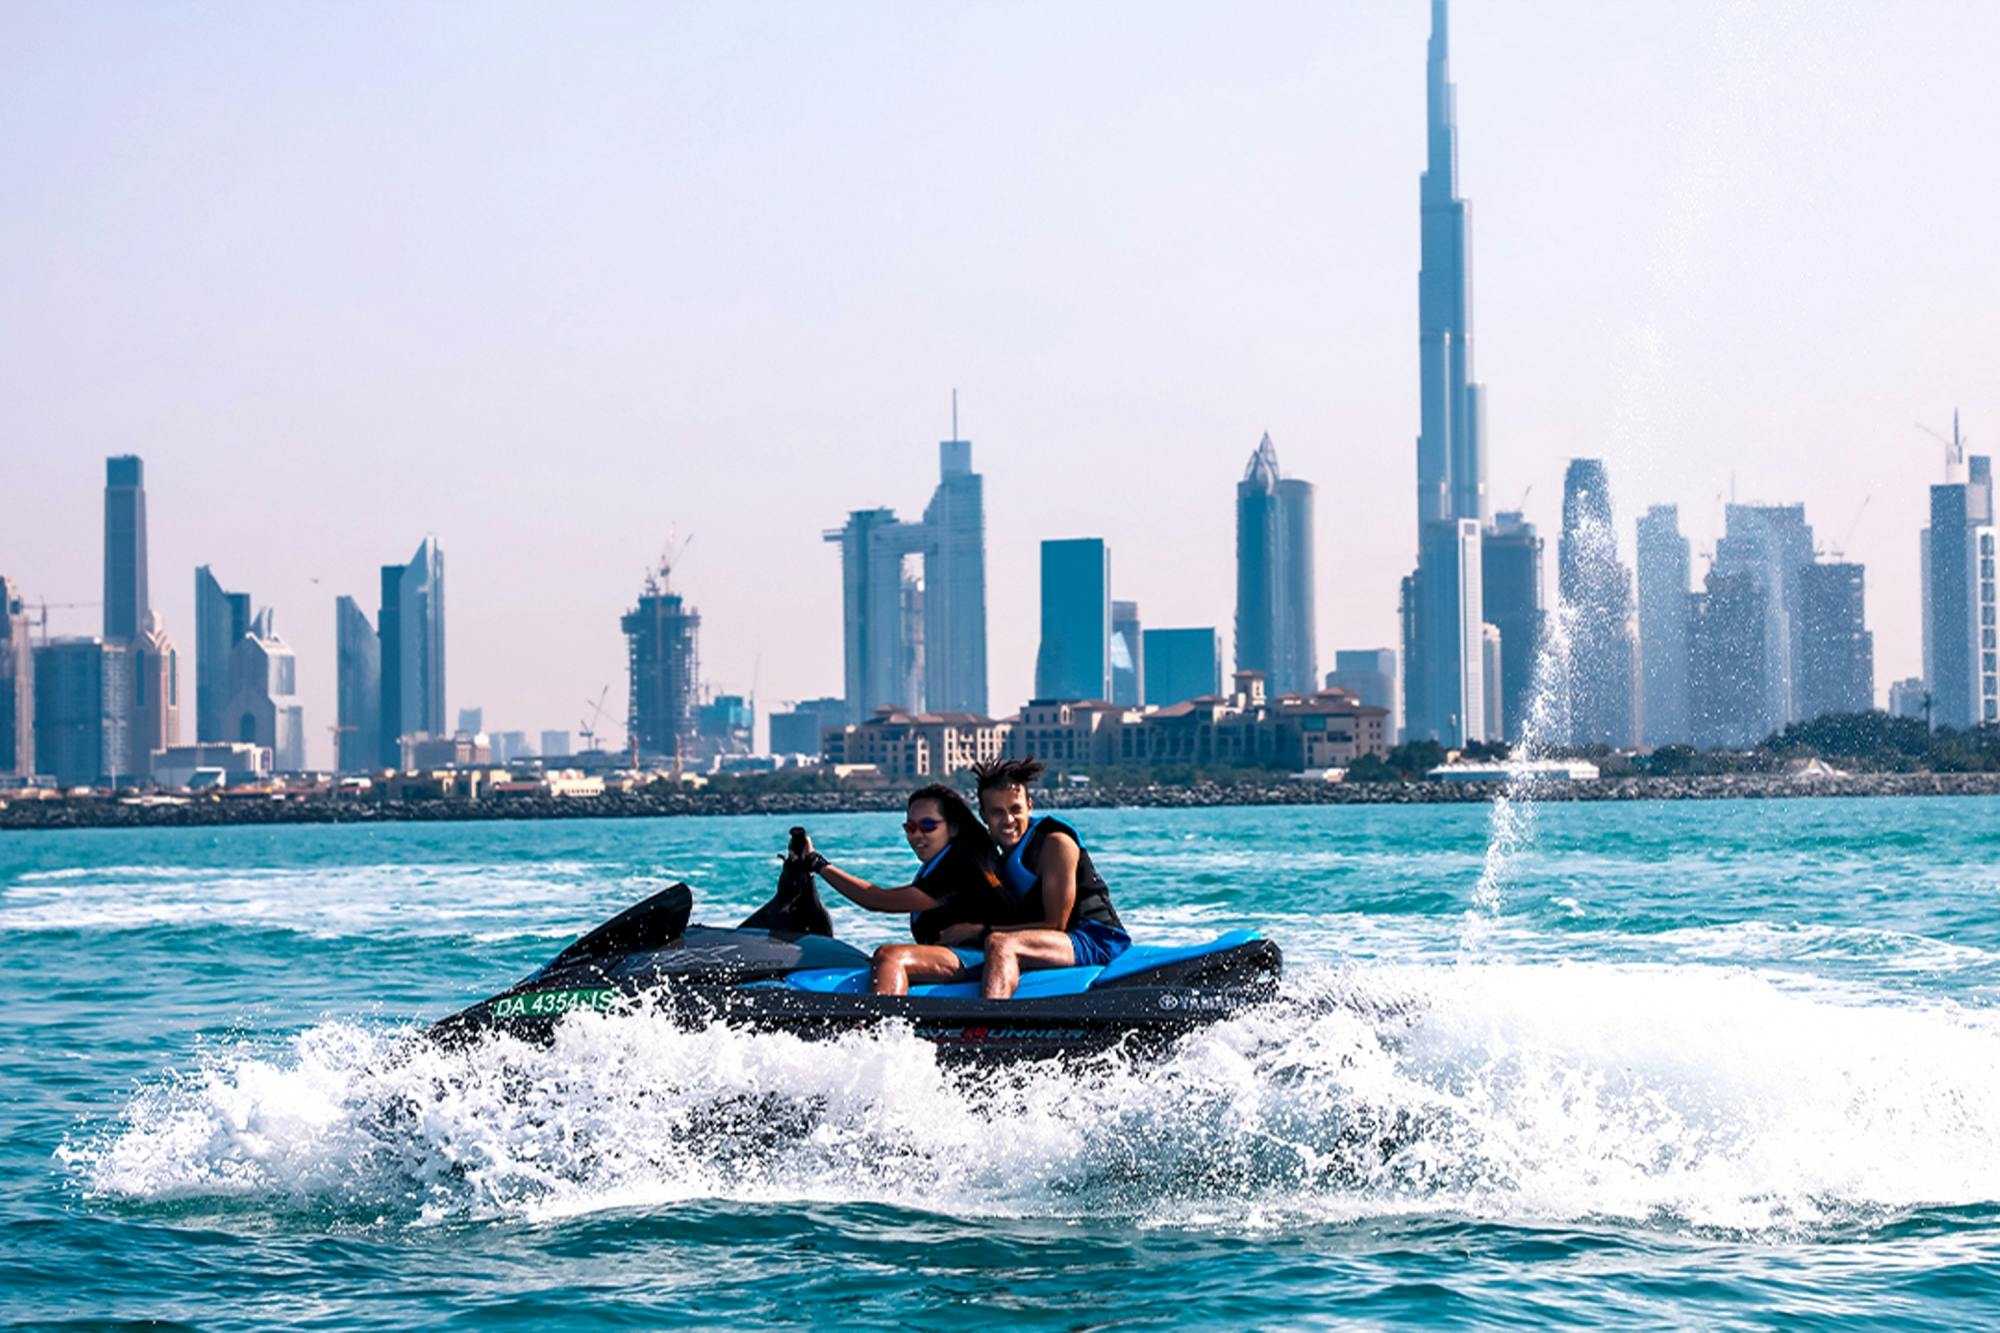 Jetski-Fahrt in Dubai mit Blick auf Burj Khalifa und Burj Al Arab